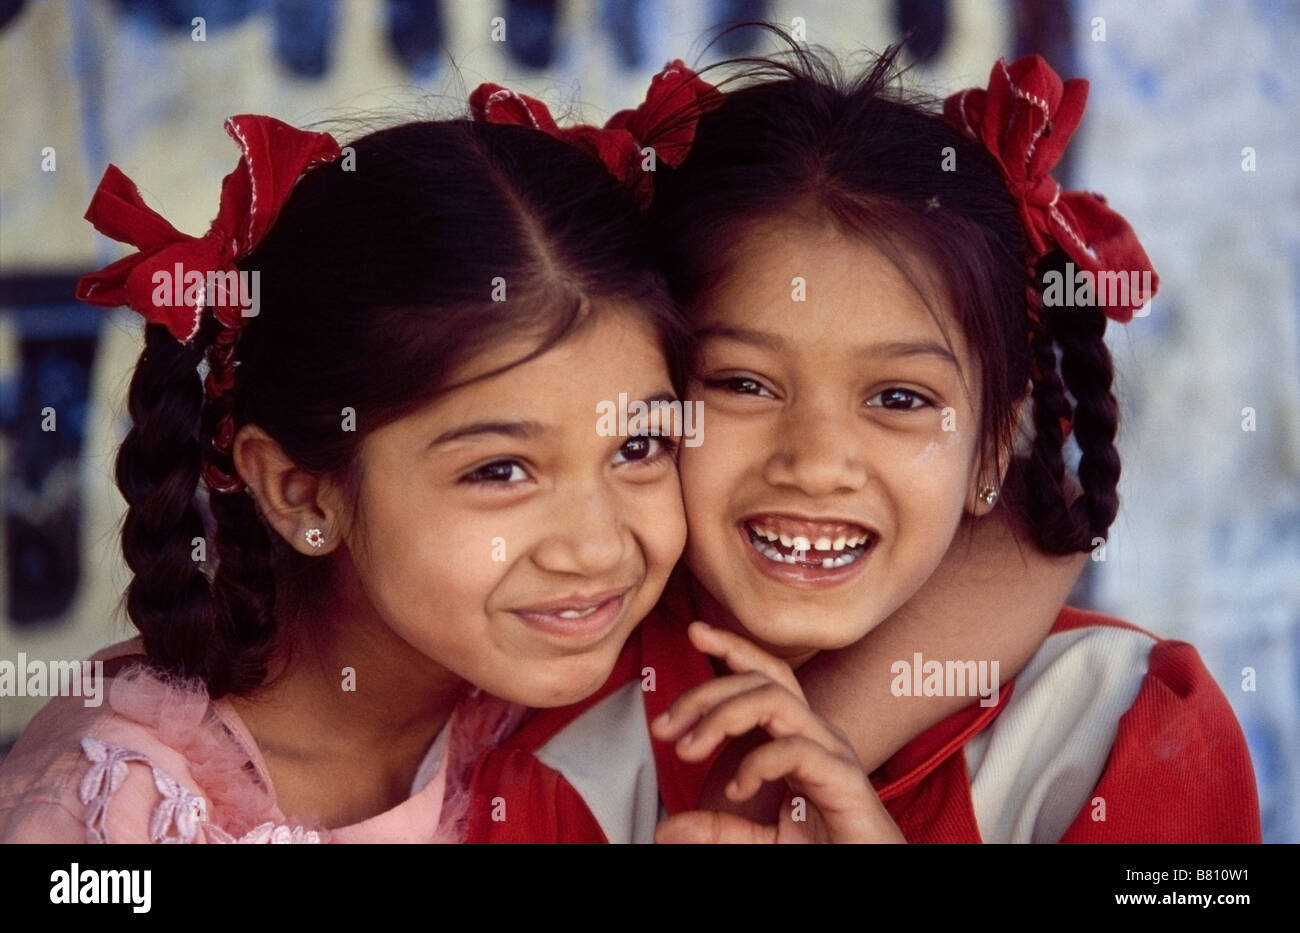 Two cheeky Indian school girls Stock Photo